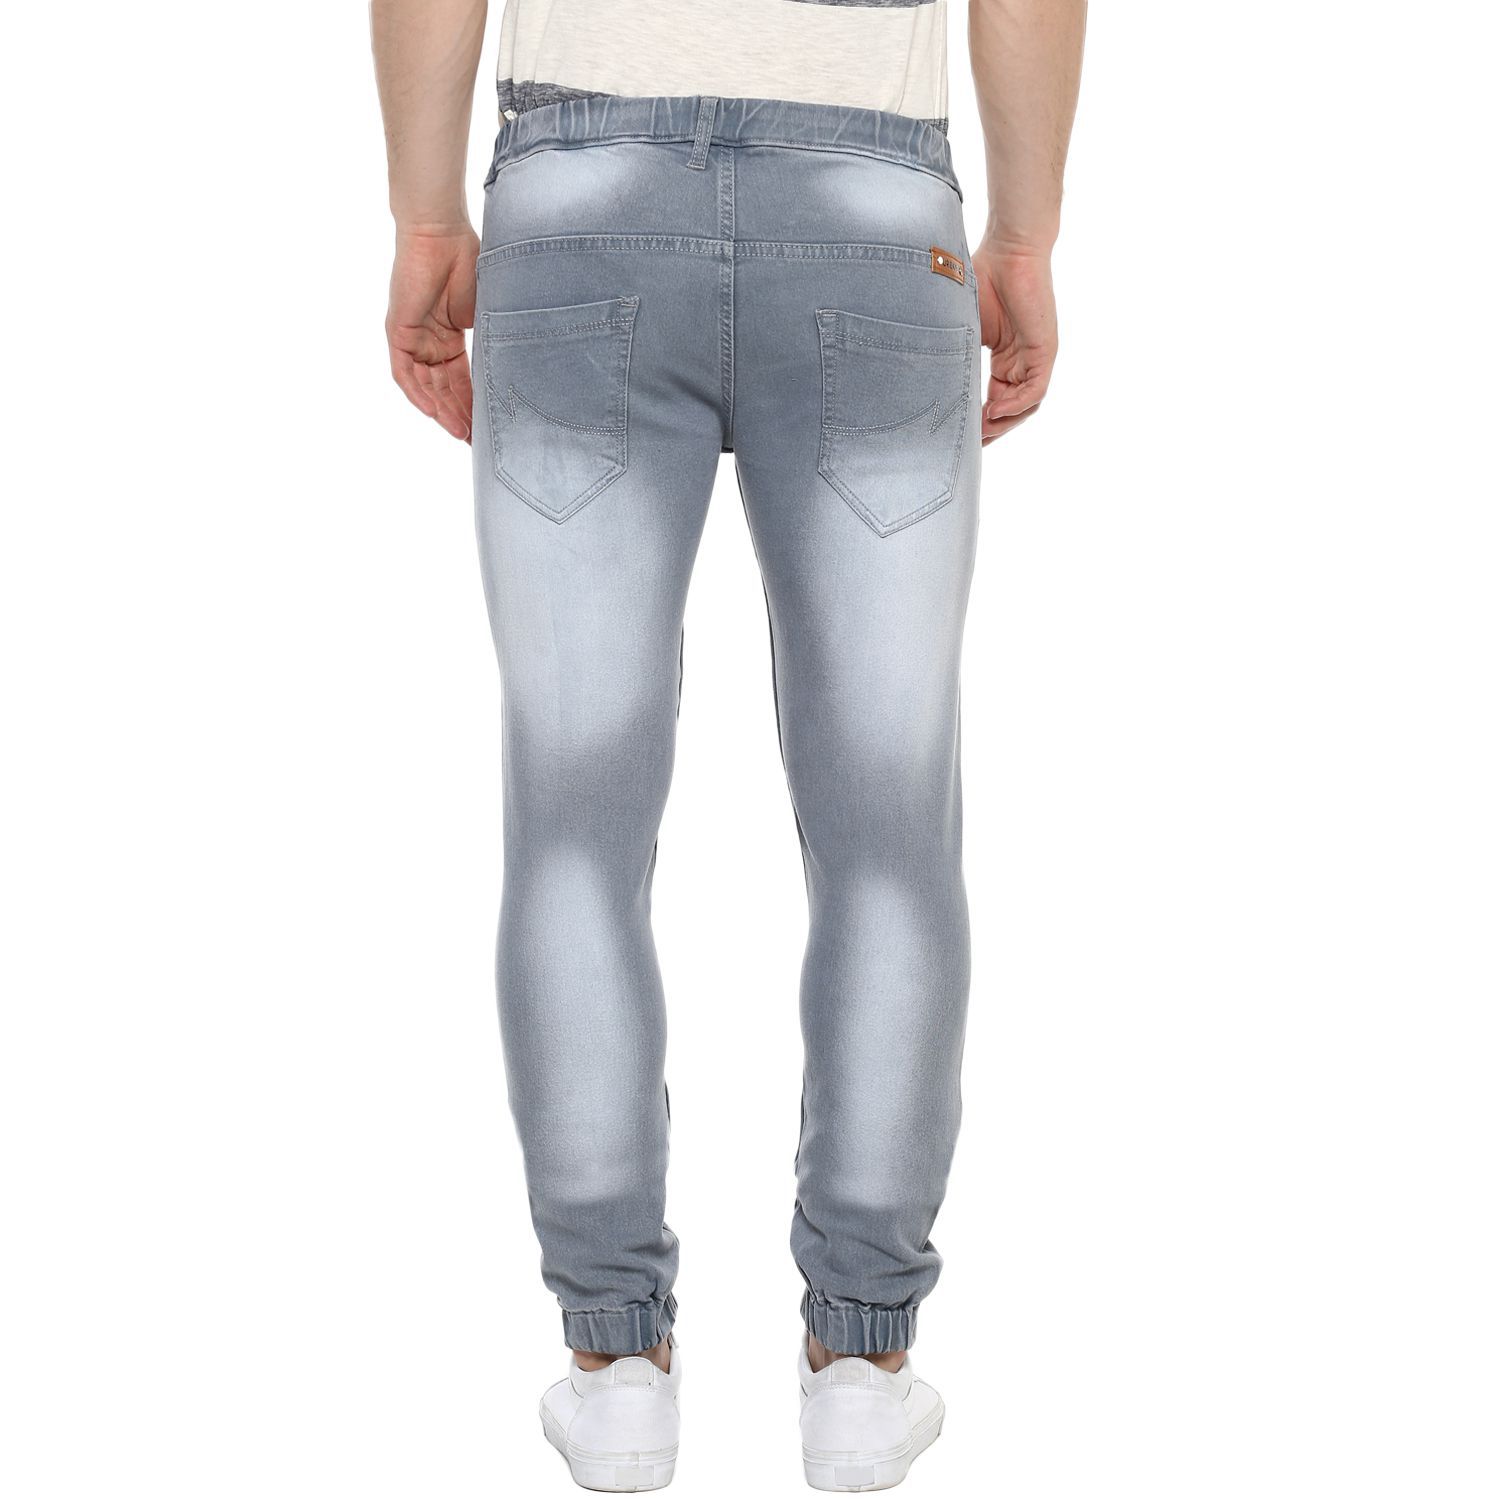 Urbano Fashion Grey Slim Jeans - Buy Urbano Fashion Grey Slim Jeans ...